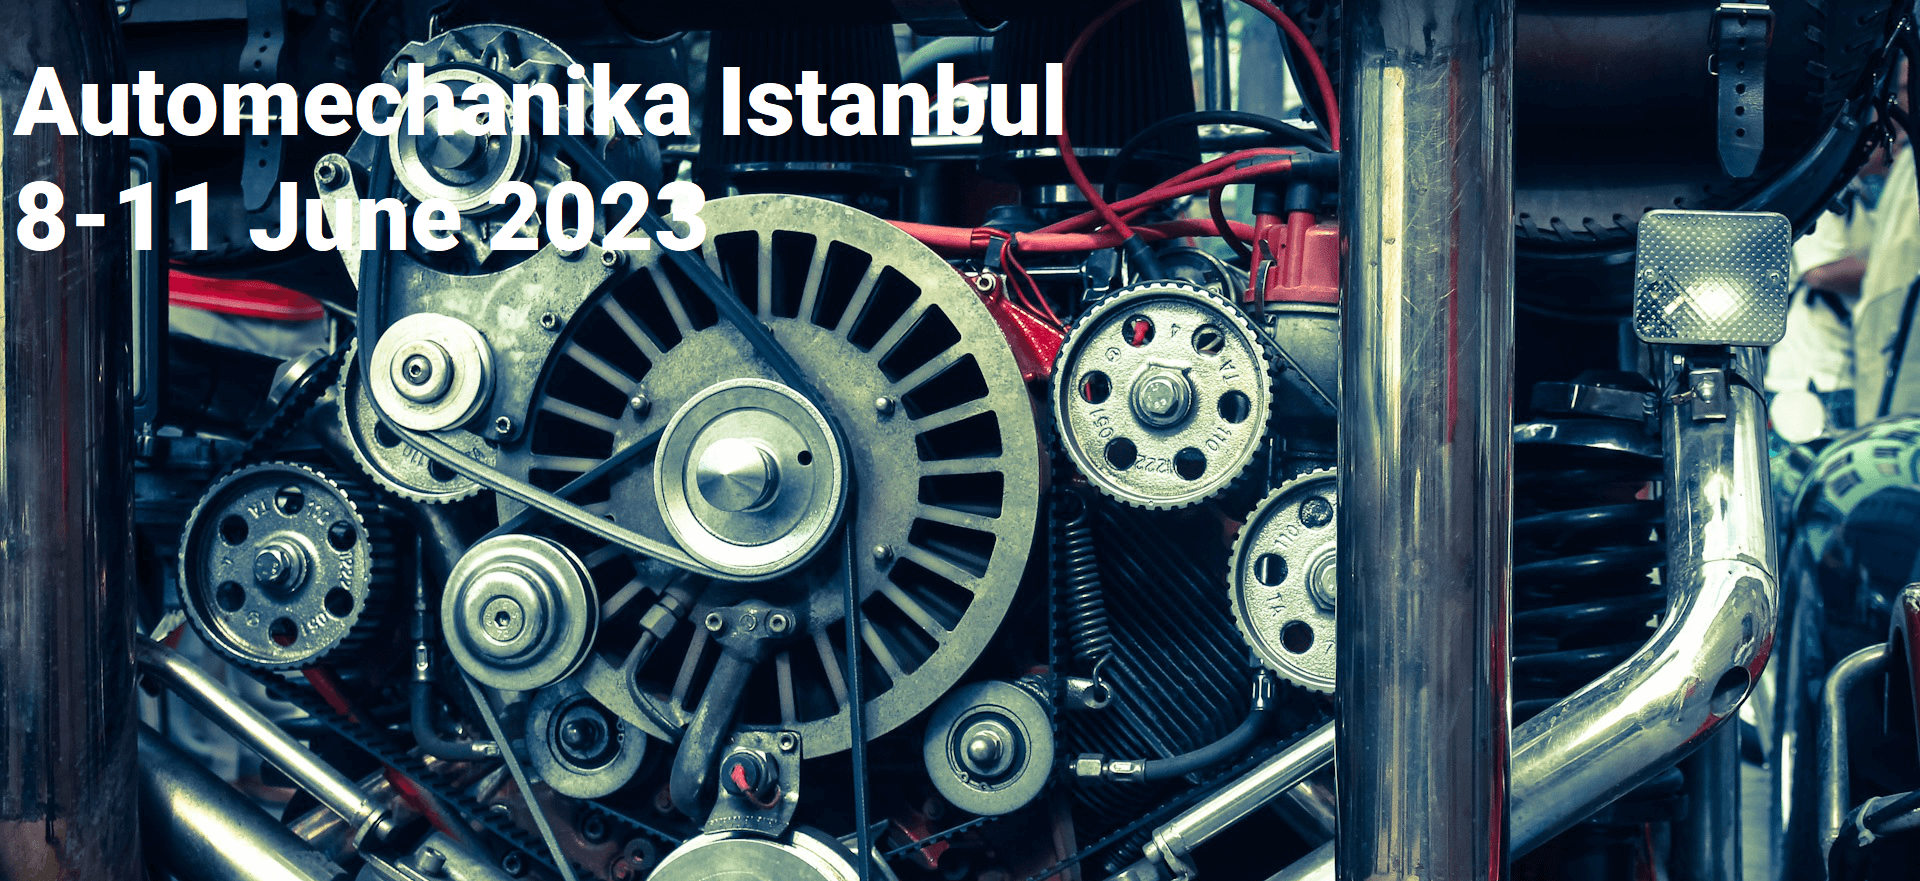 Automechanika Istanbul exhibition 2023